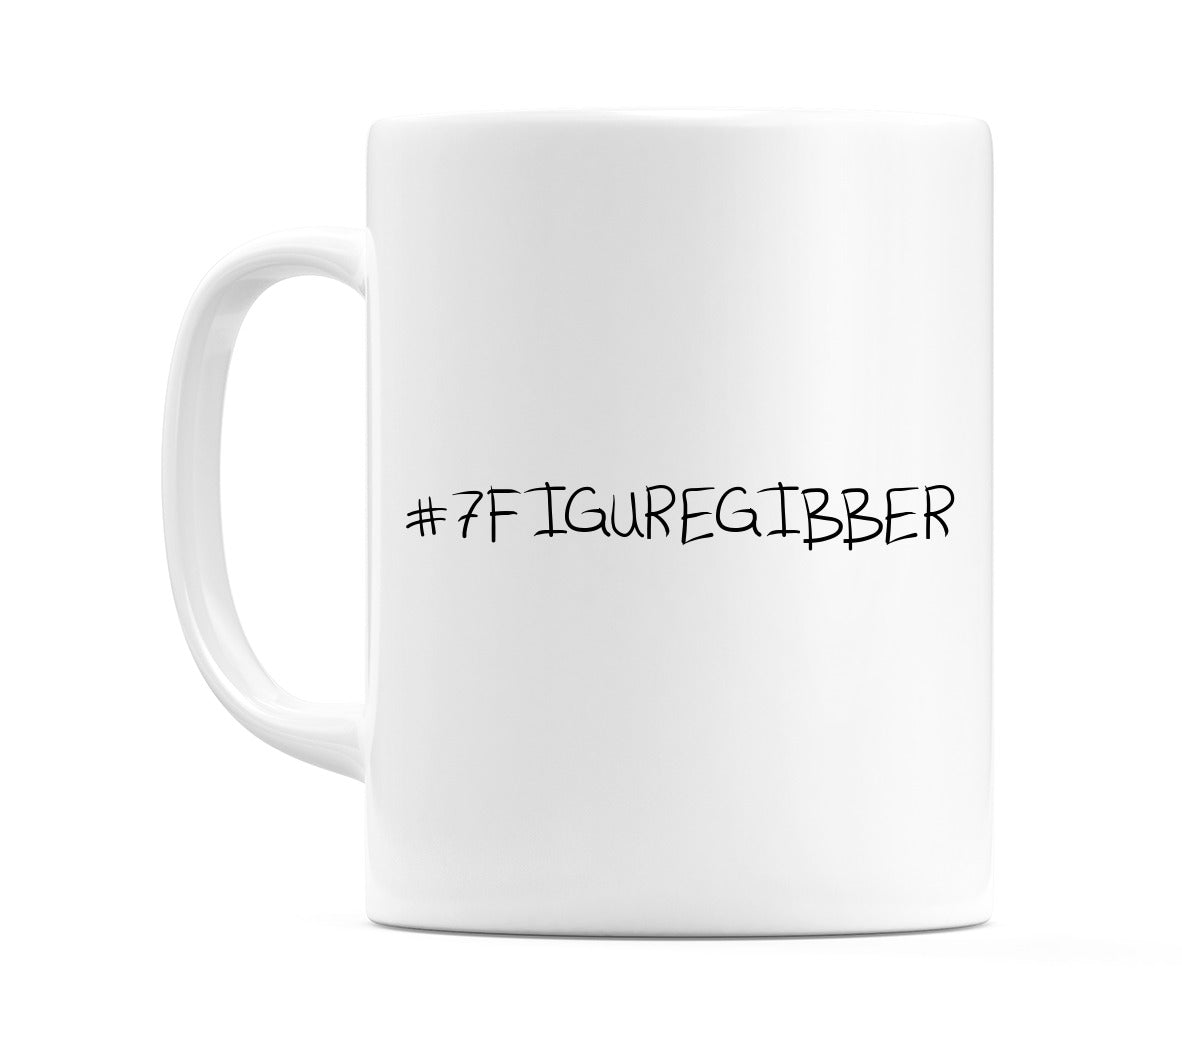 #7FIGUREGIBBER Mug